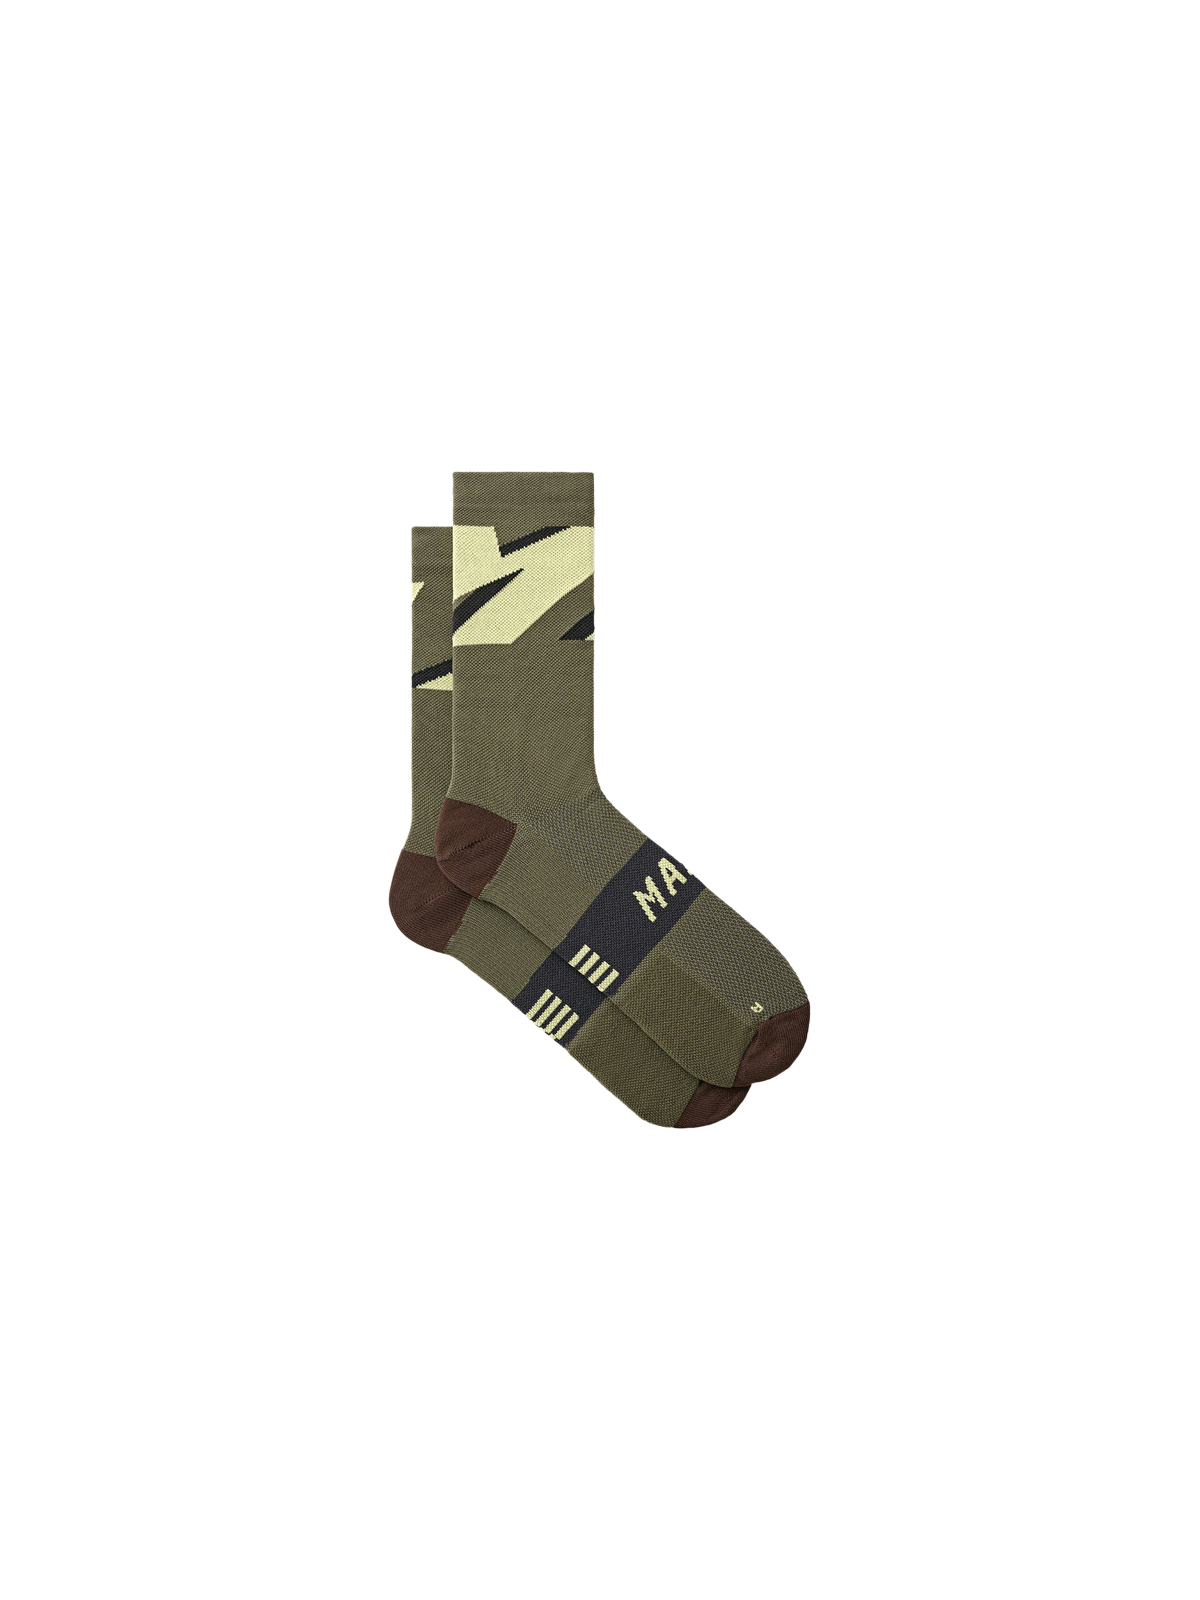 Evolve 3D Sock